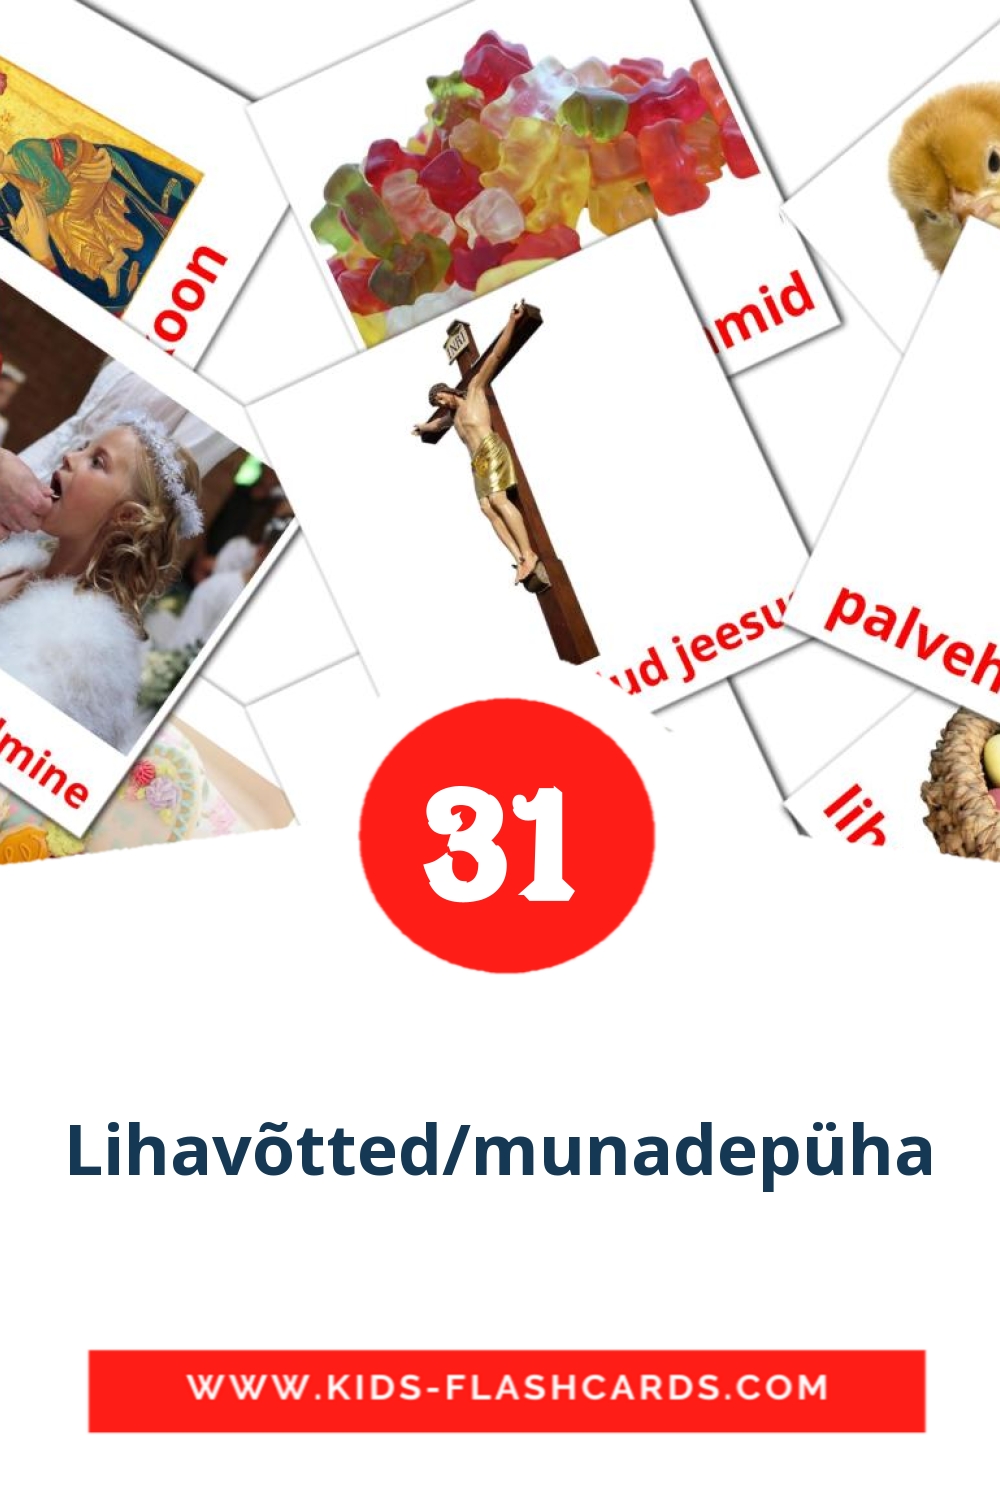 31 carte illustrate di Lihavõtted/munadepüha per la scuola materna in estone